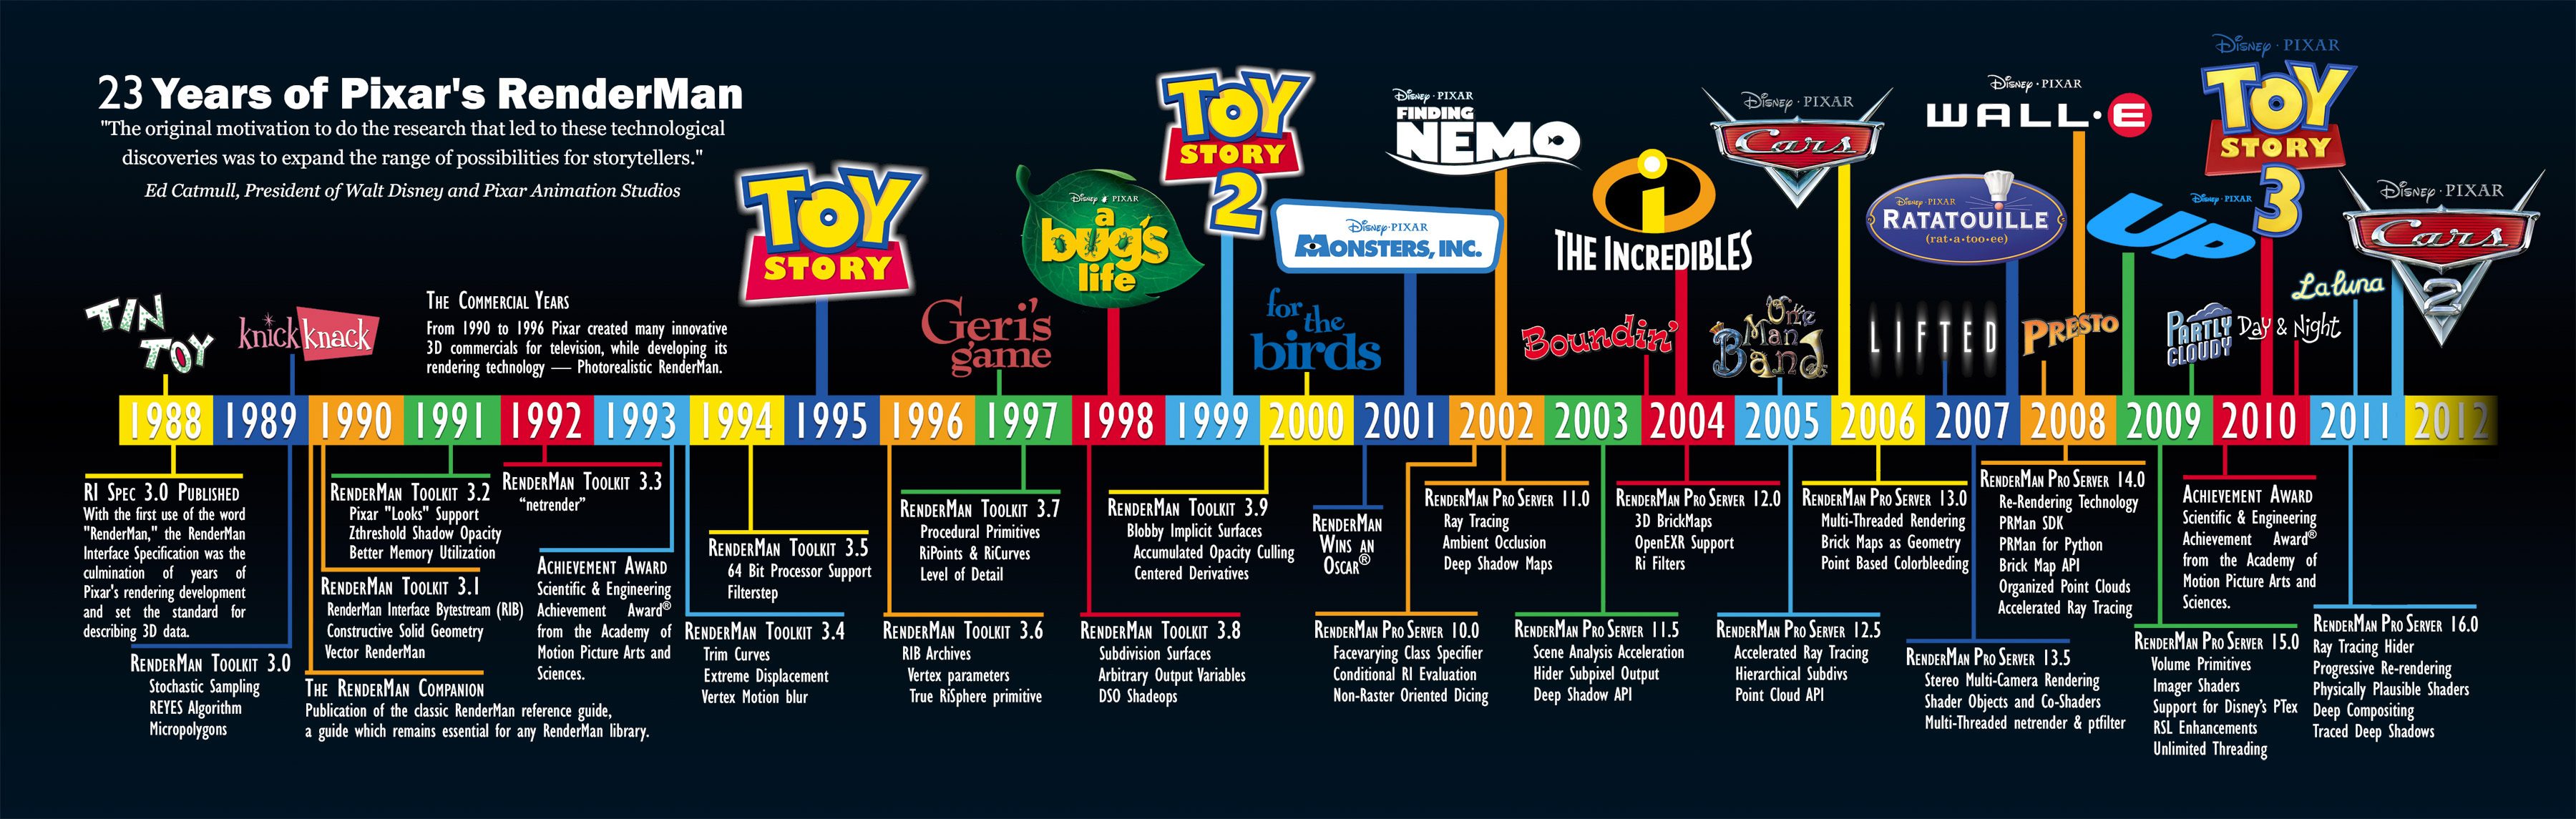 Disney Pixar Movie Timeline